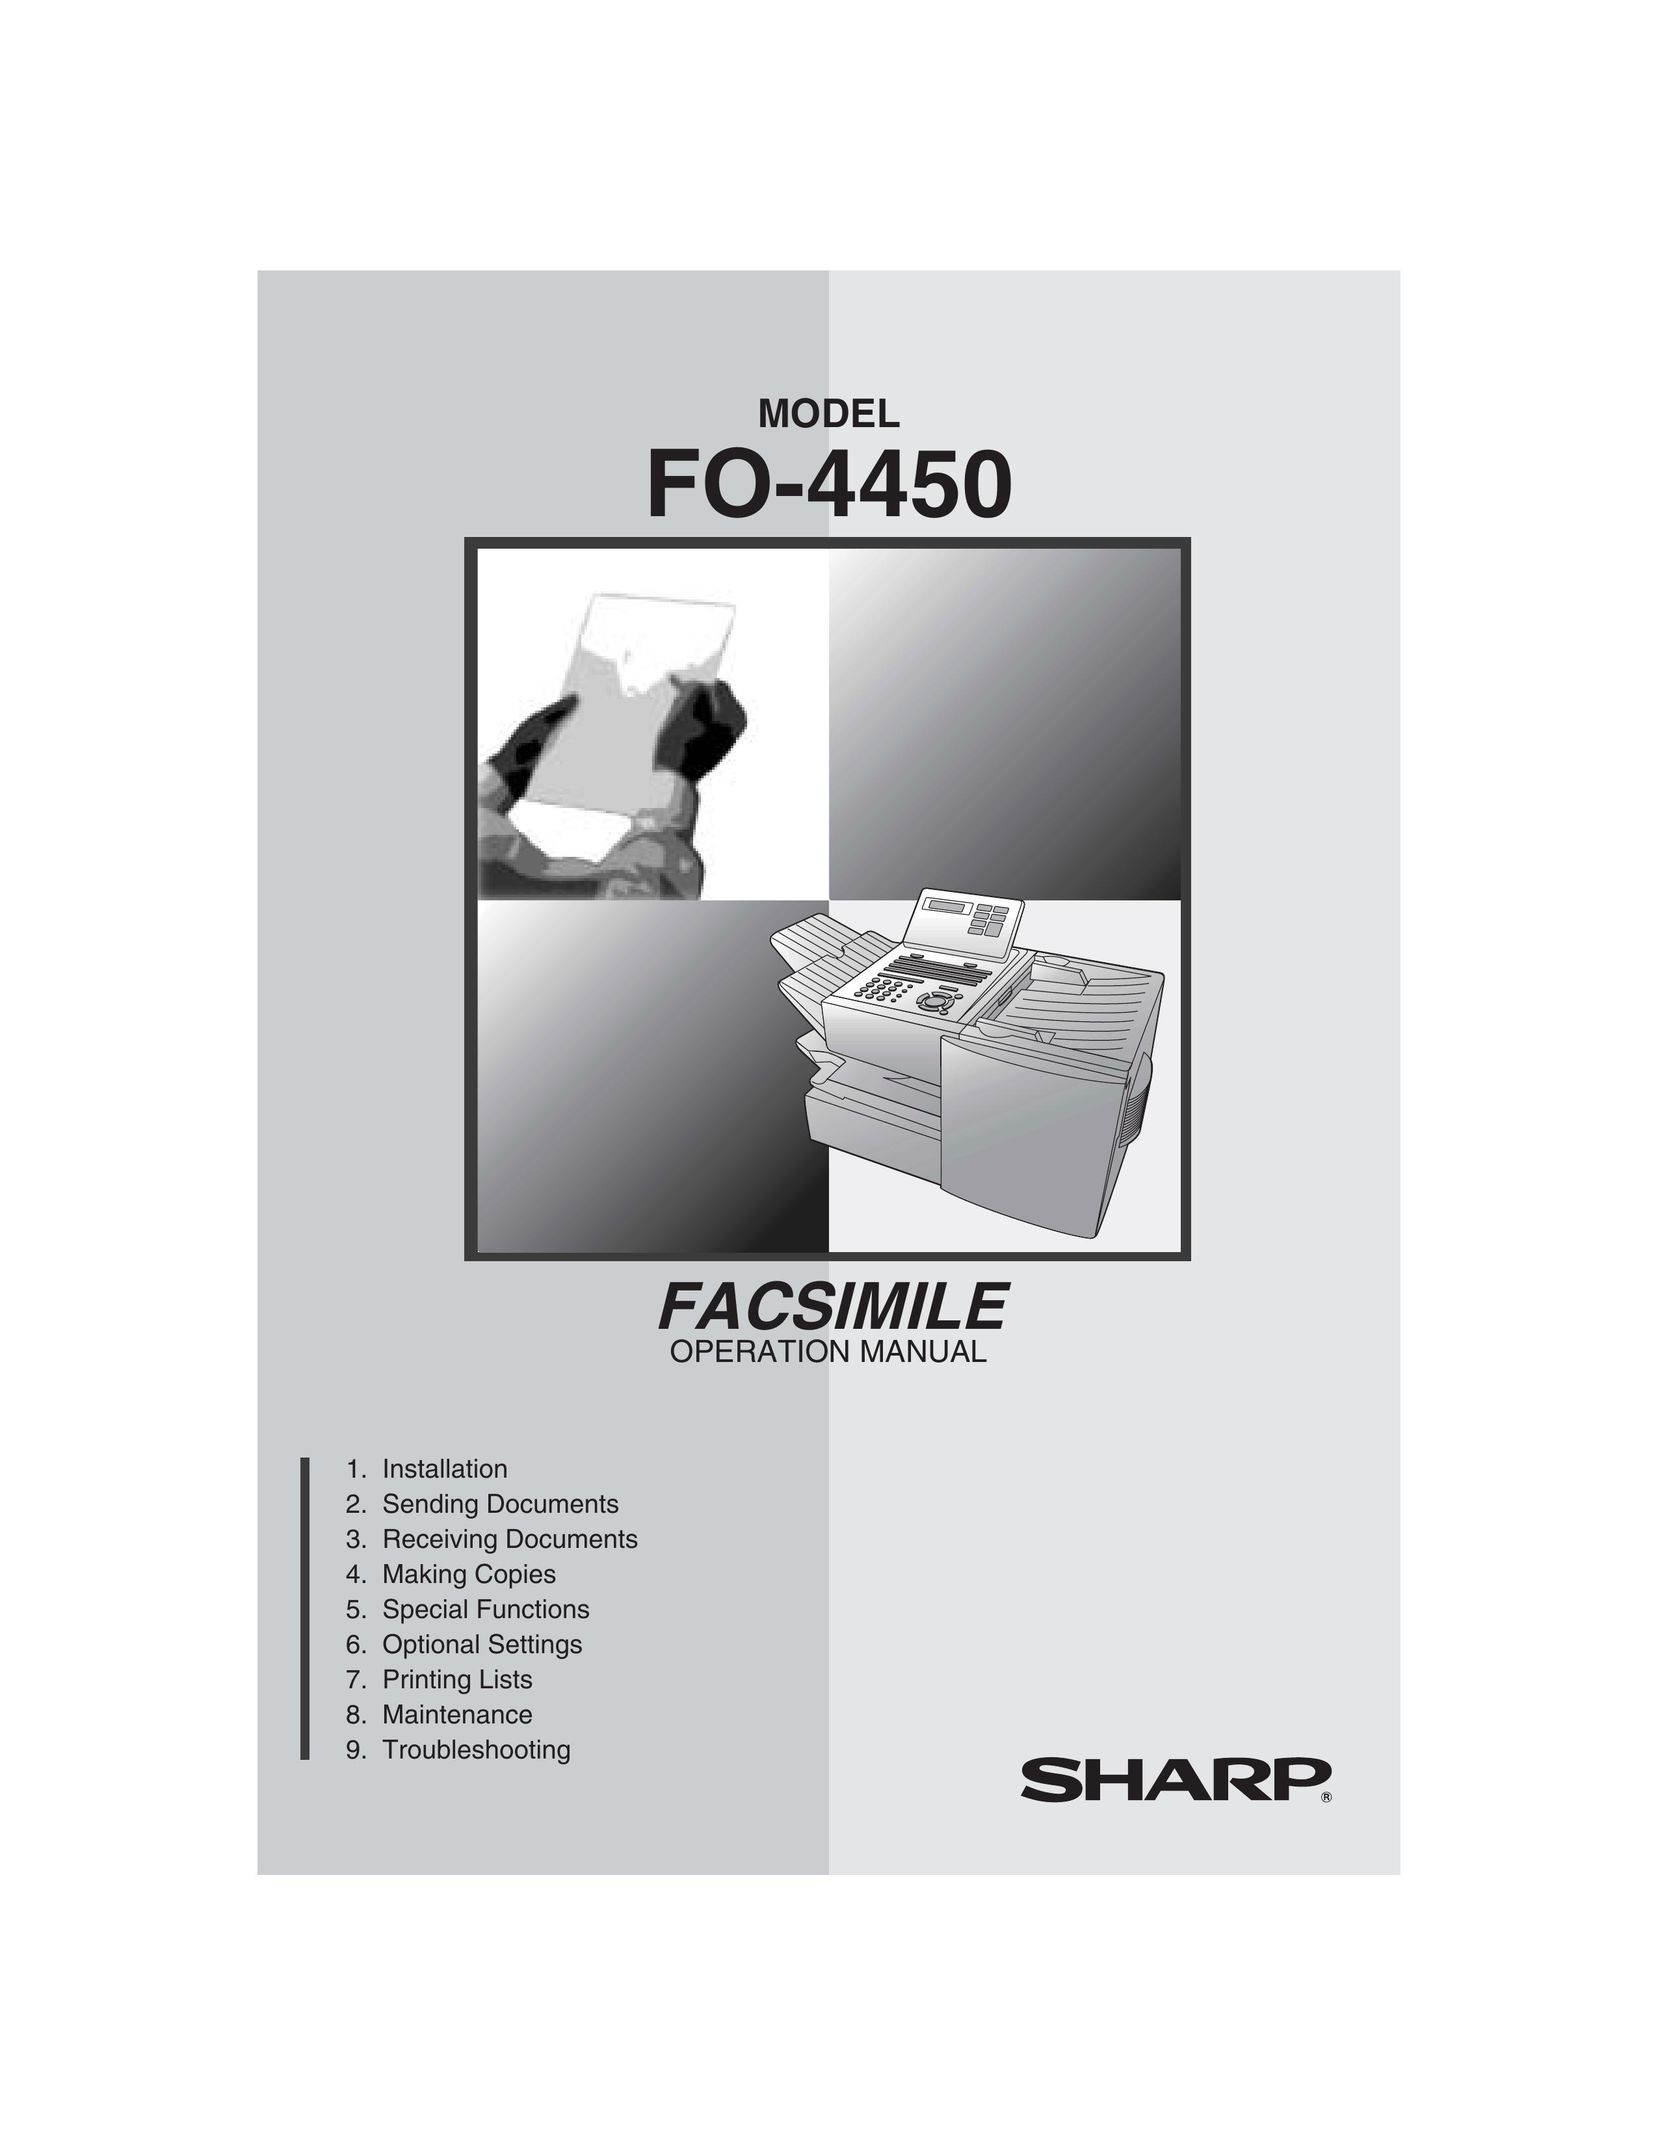 Sharp FO-4450 Fax Machine User Manual